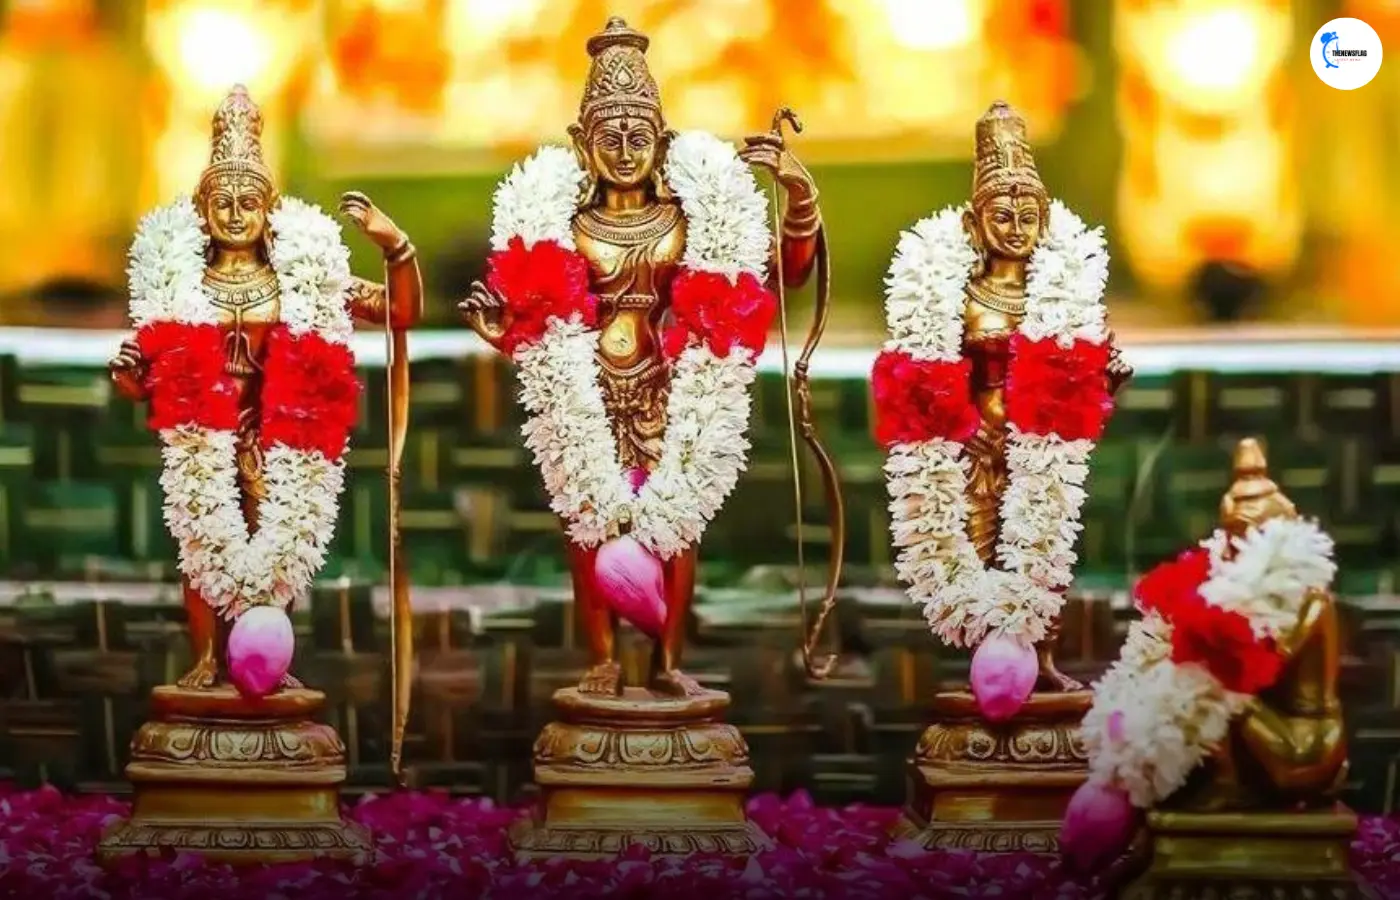 Can unmarried couples perform Sita Rama kalyanam 2024 together on srirama navami?